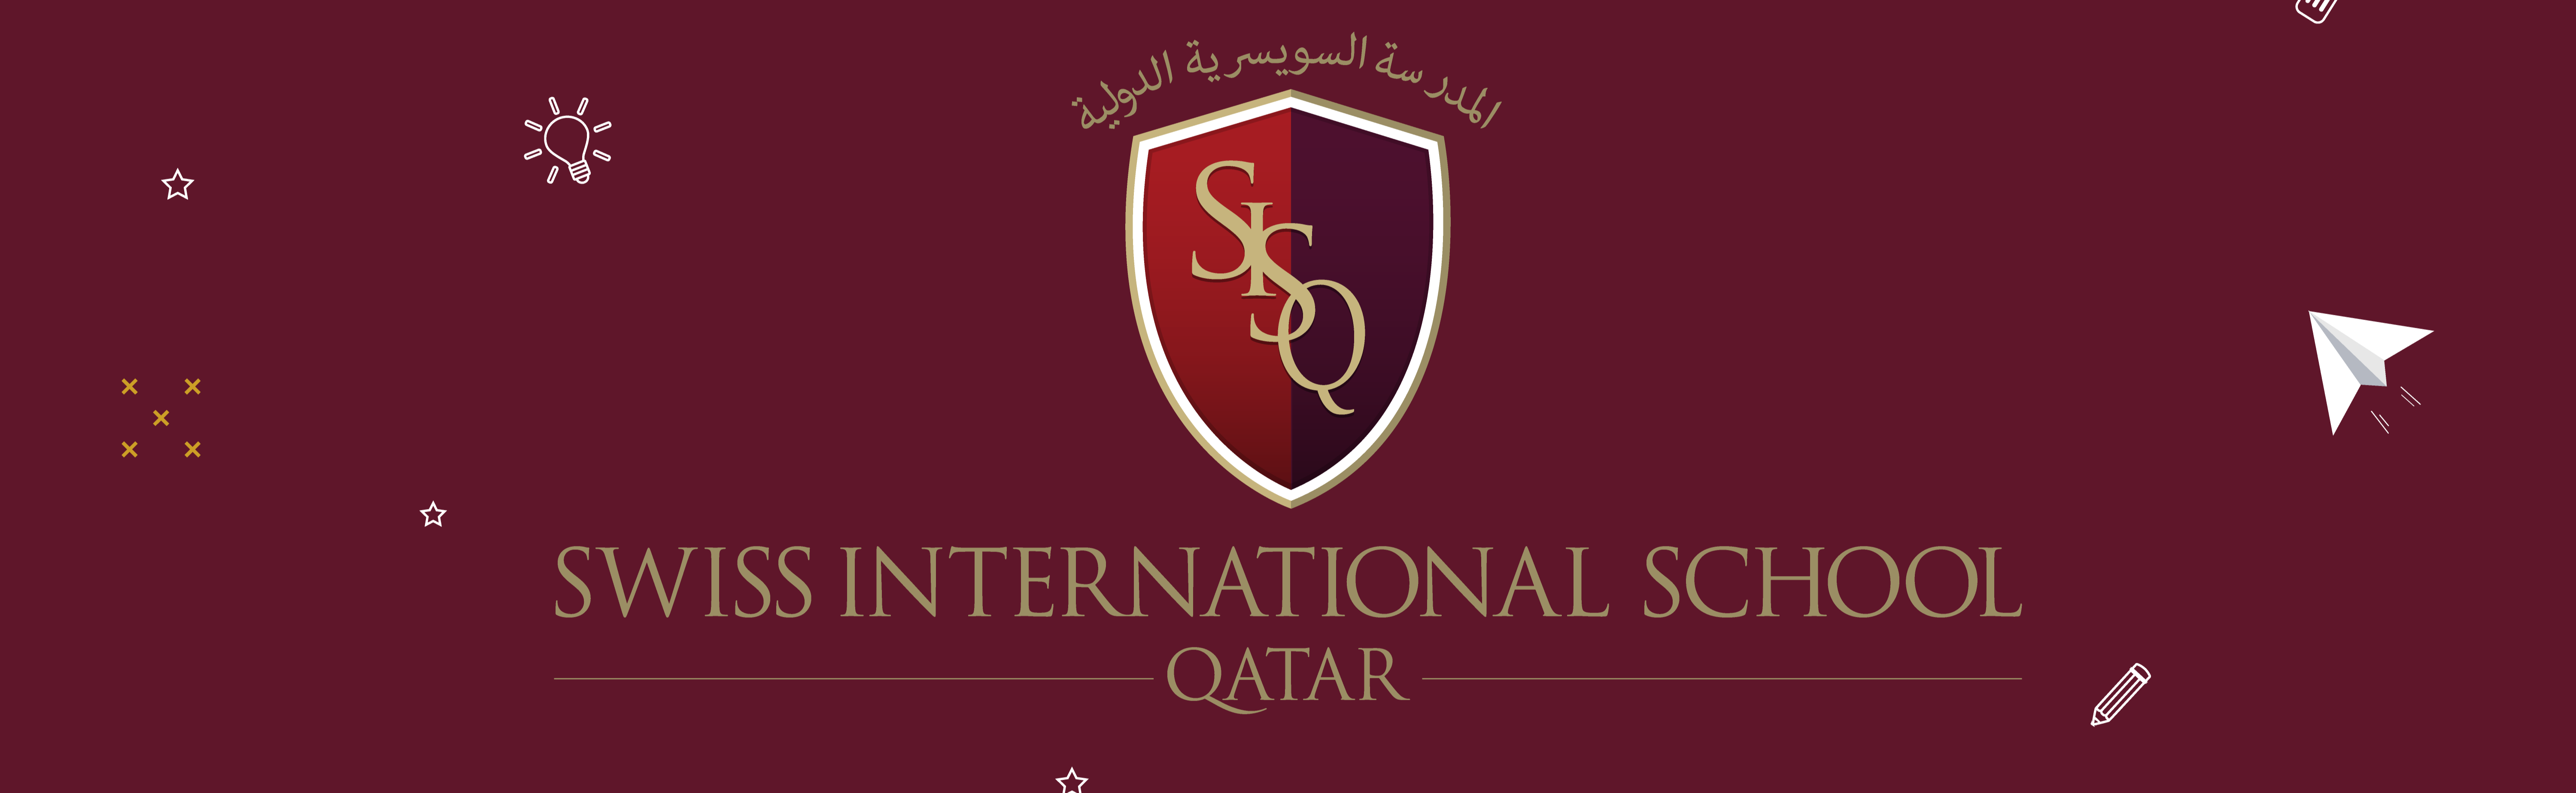 Swiss International School in Qatar Banner